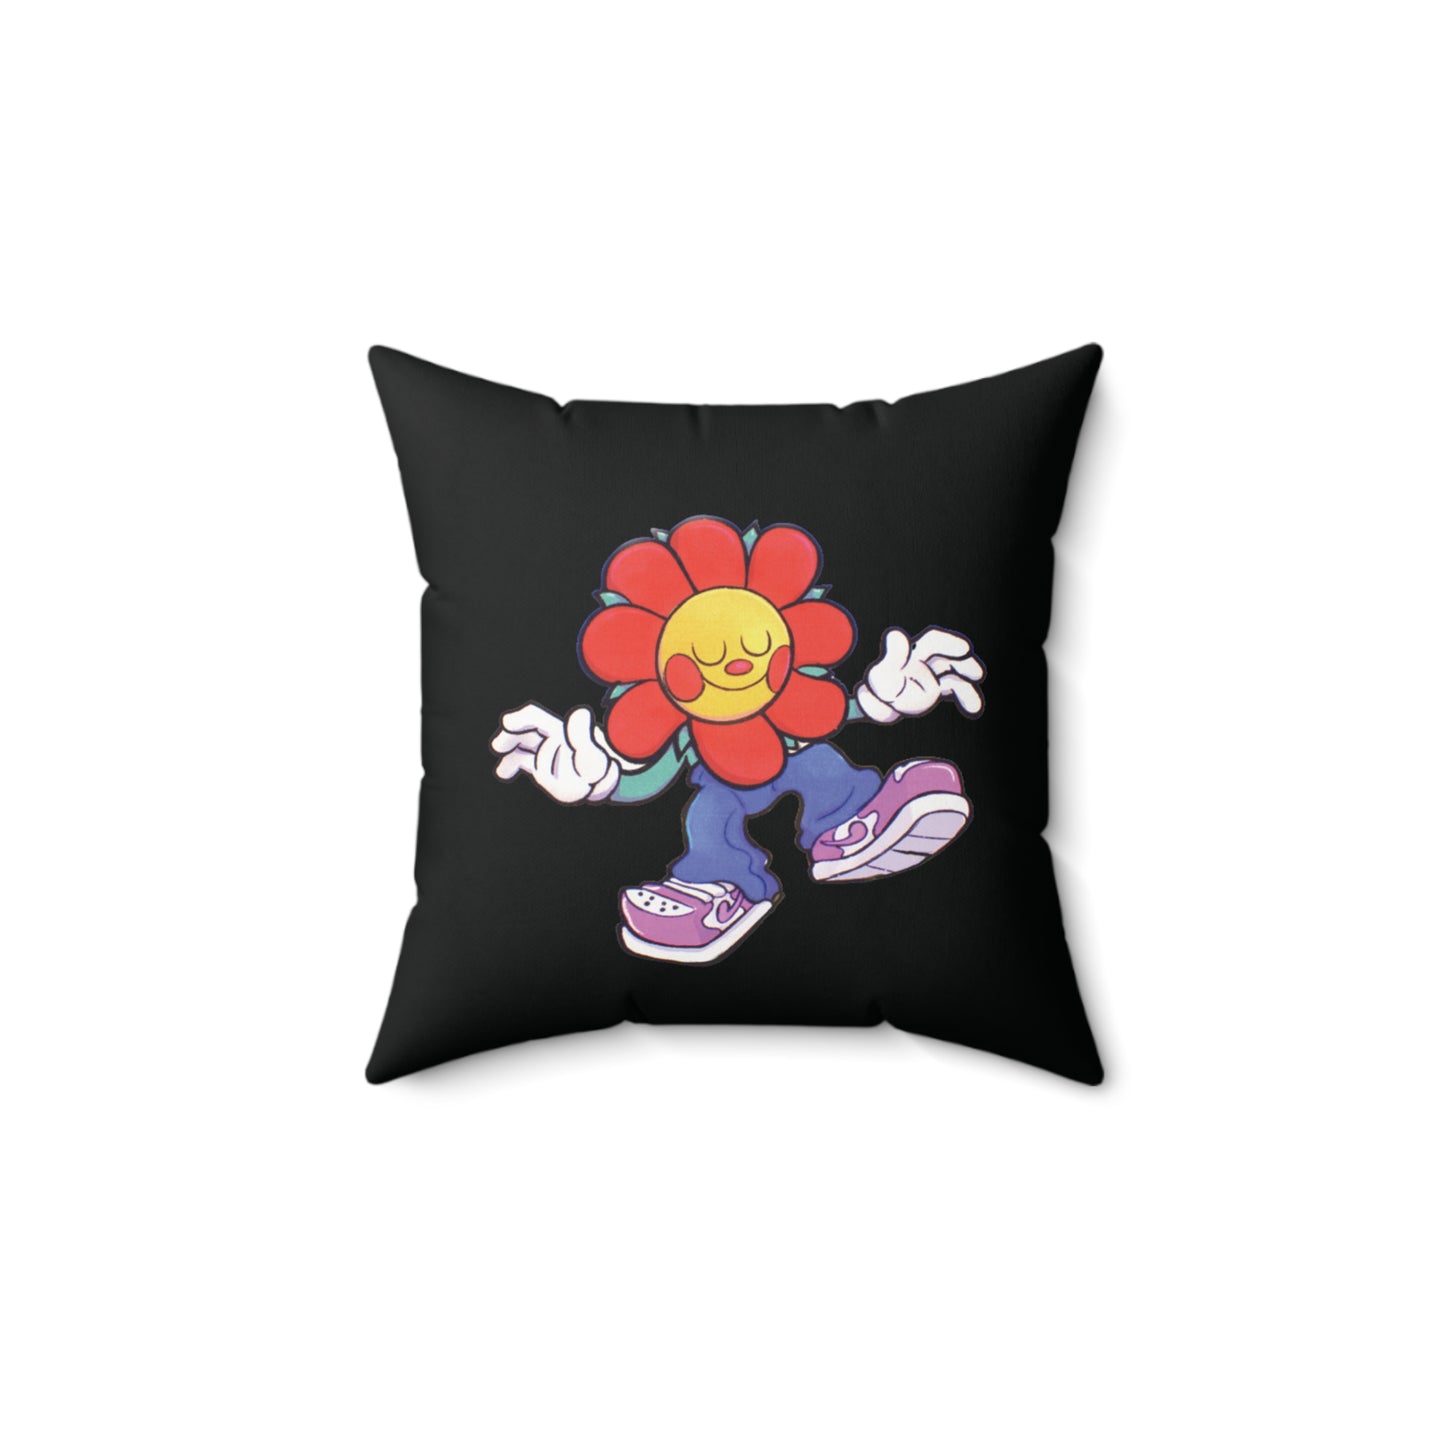 Flower Child Spun Polyester Square Pillow